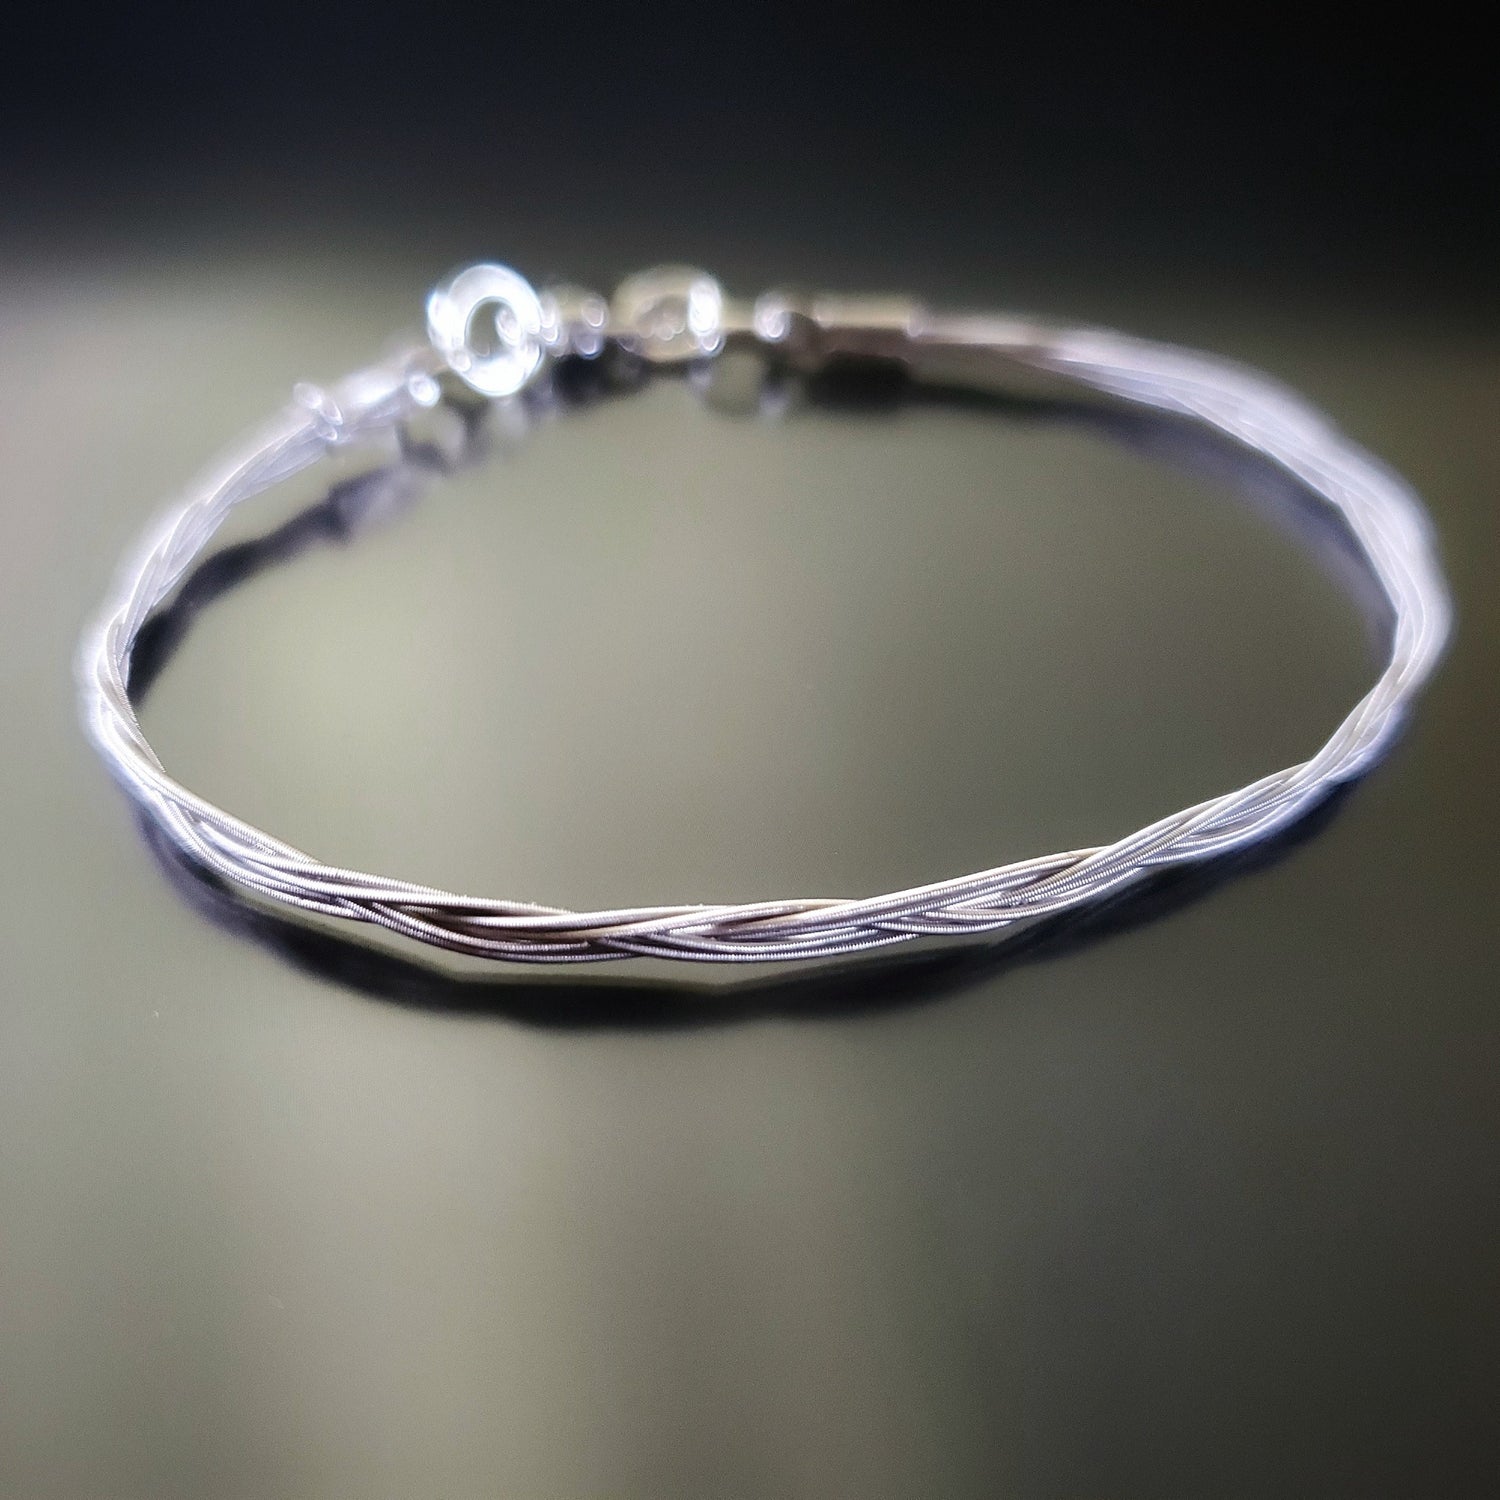 silver banjo string bracelet on a black background